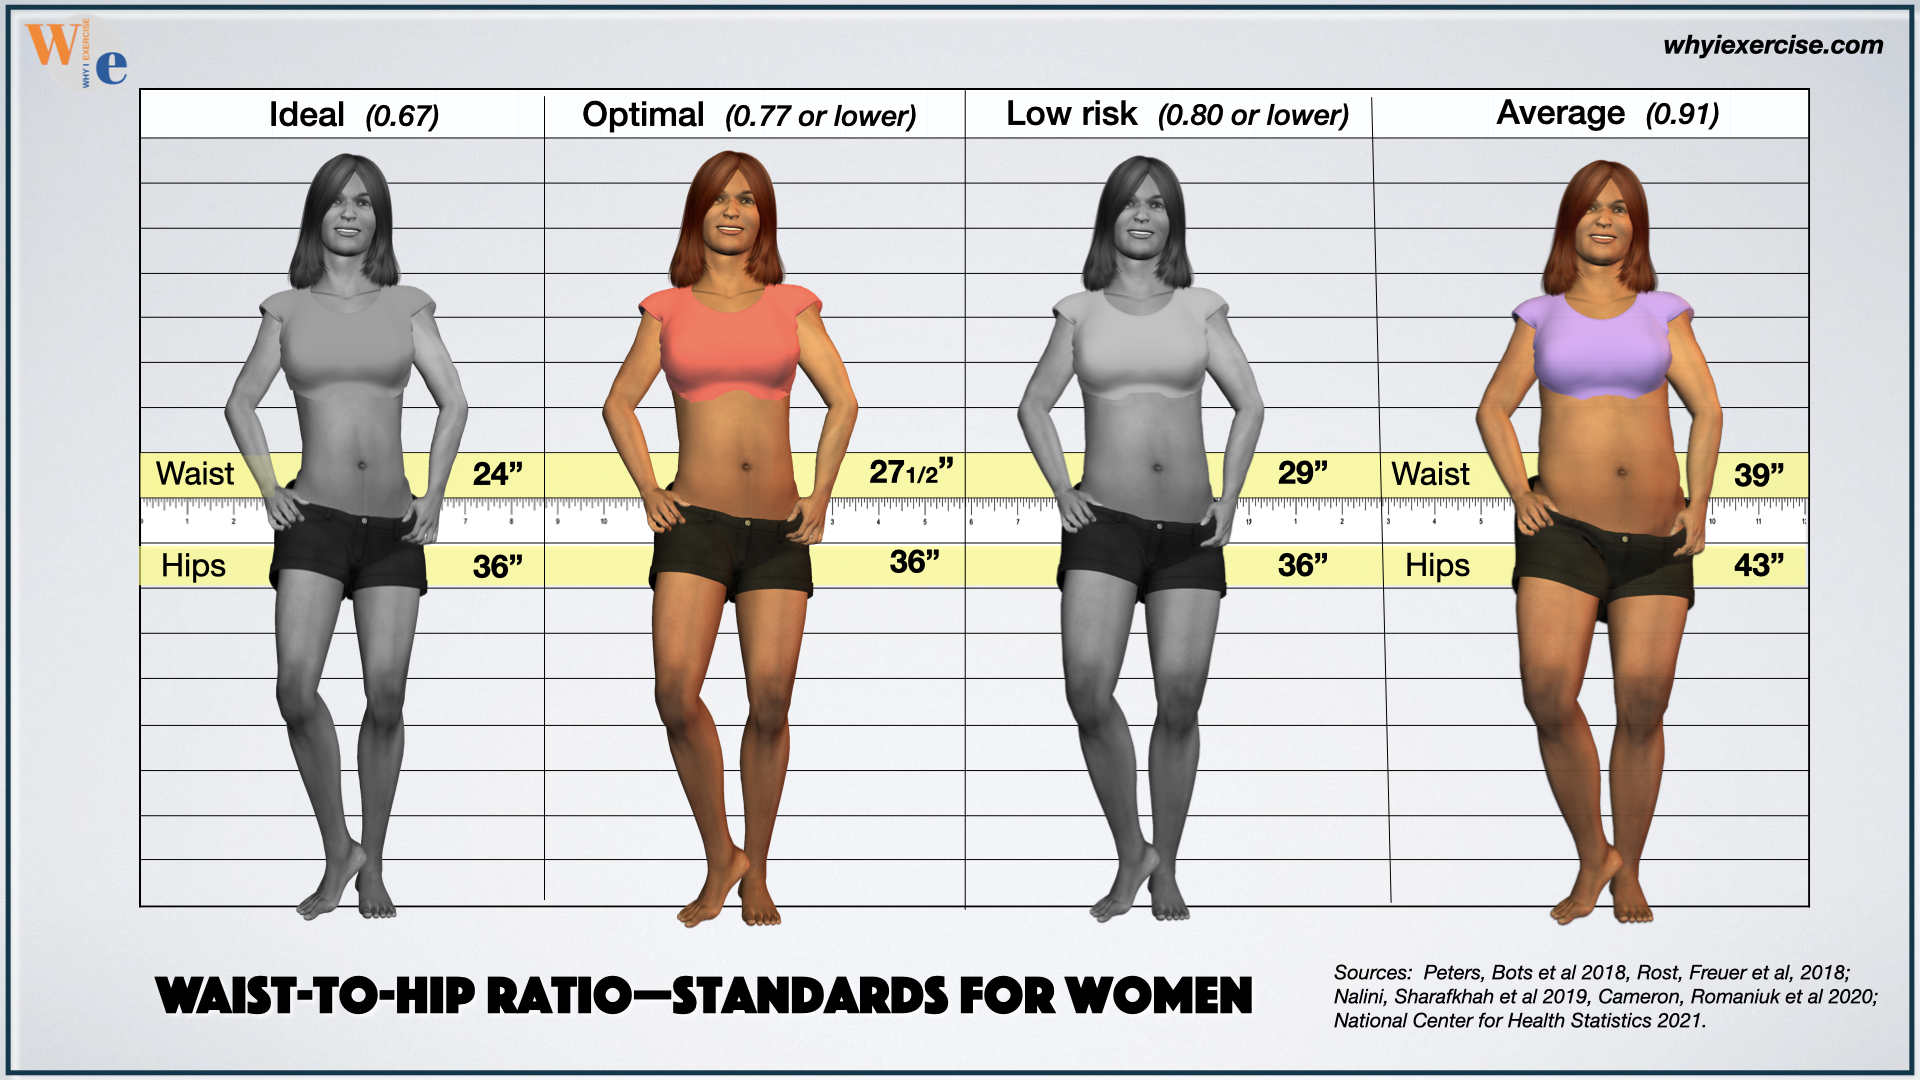 Waist-to-hip ratio and body symmetry